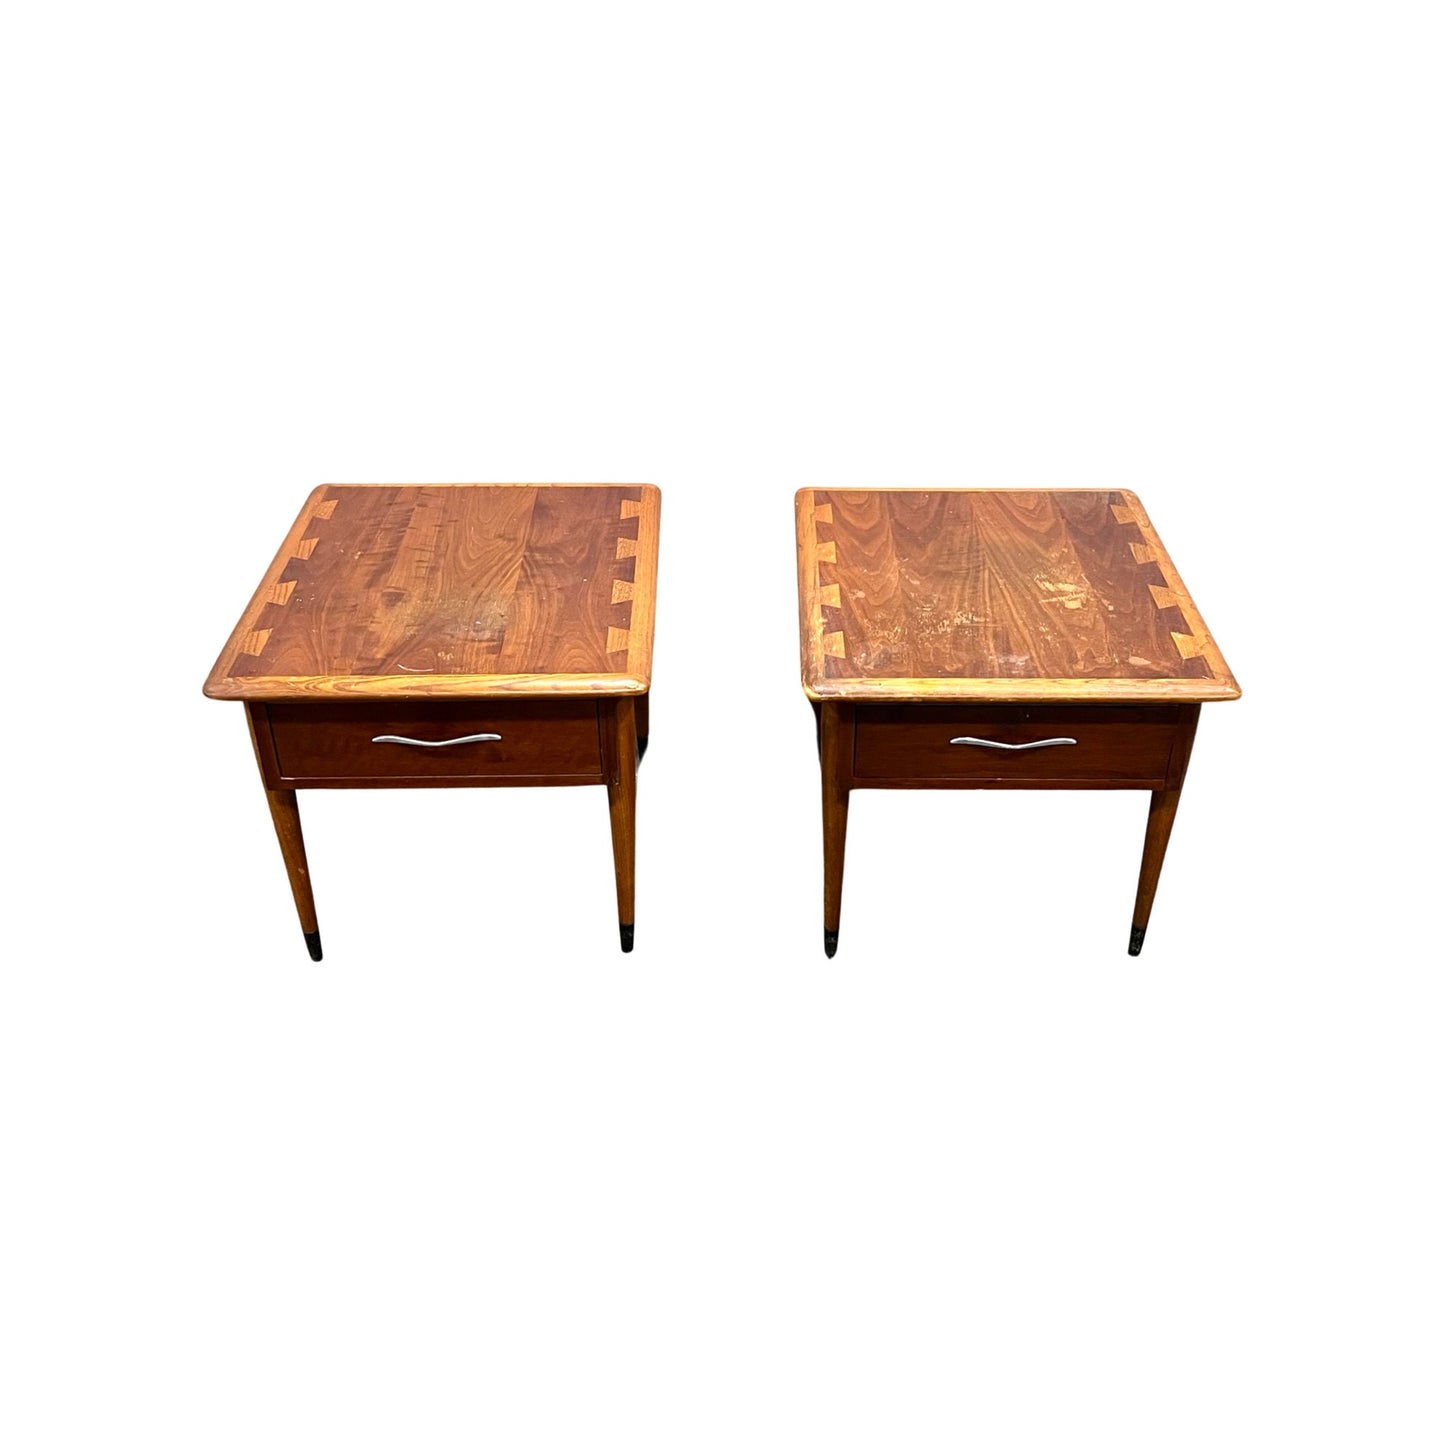 Lane Acclaim Vintage Mid Century Modern Pair of Nightstands Bedside Tables c. 1960s